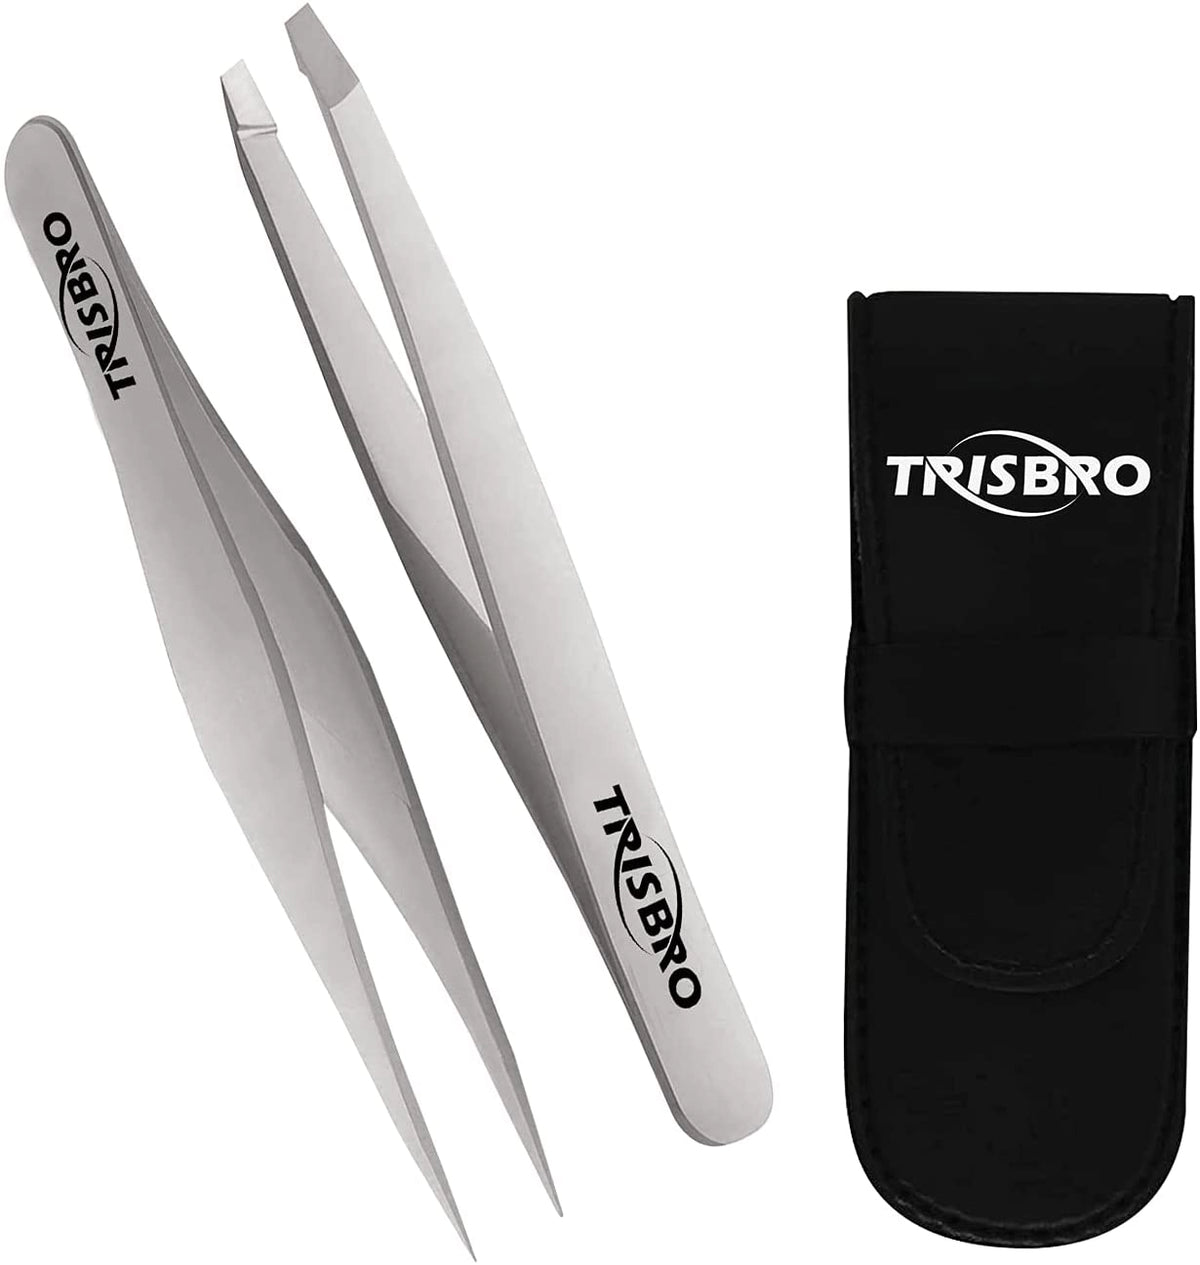 Trisbro Tweezer Set of 2